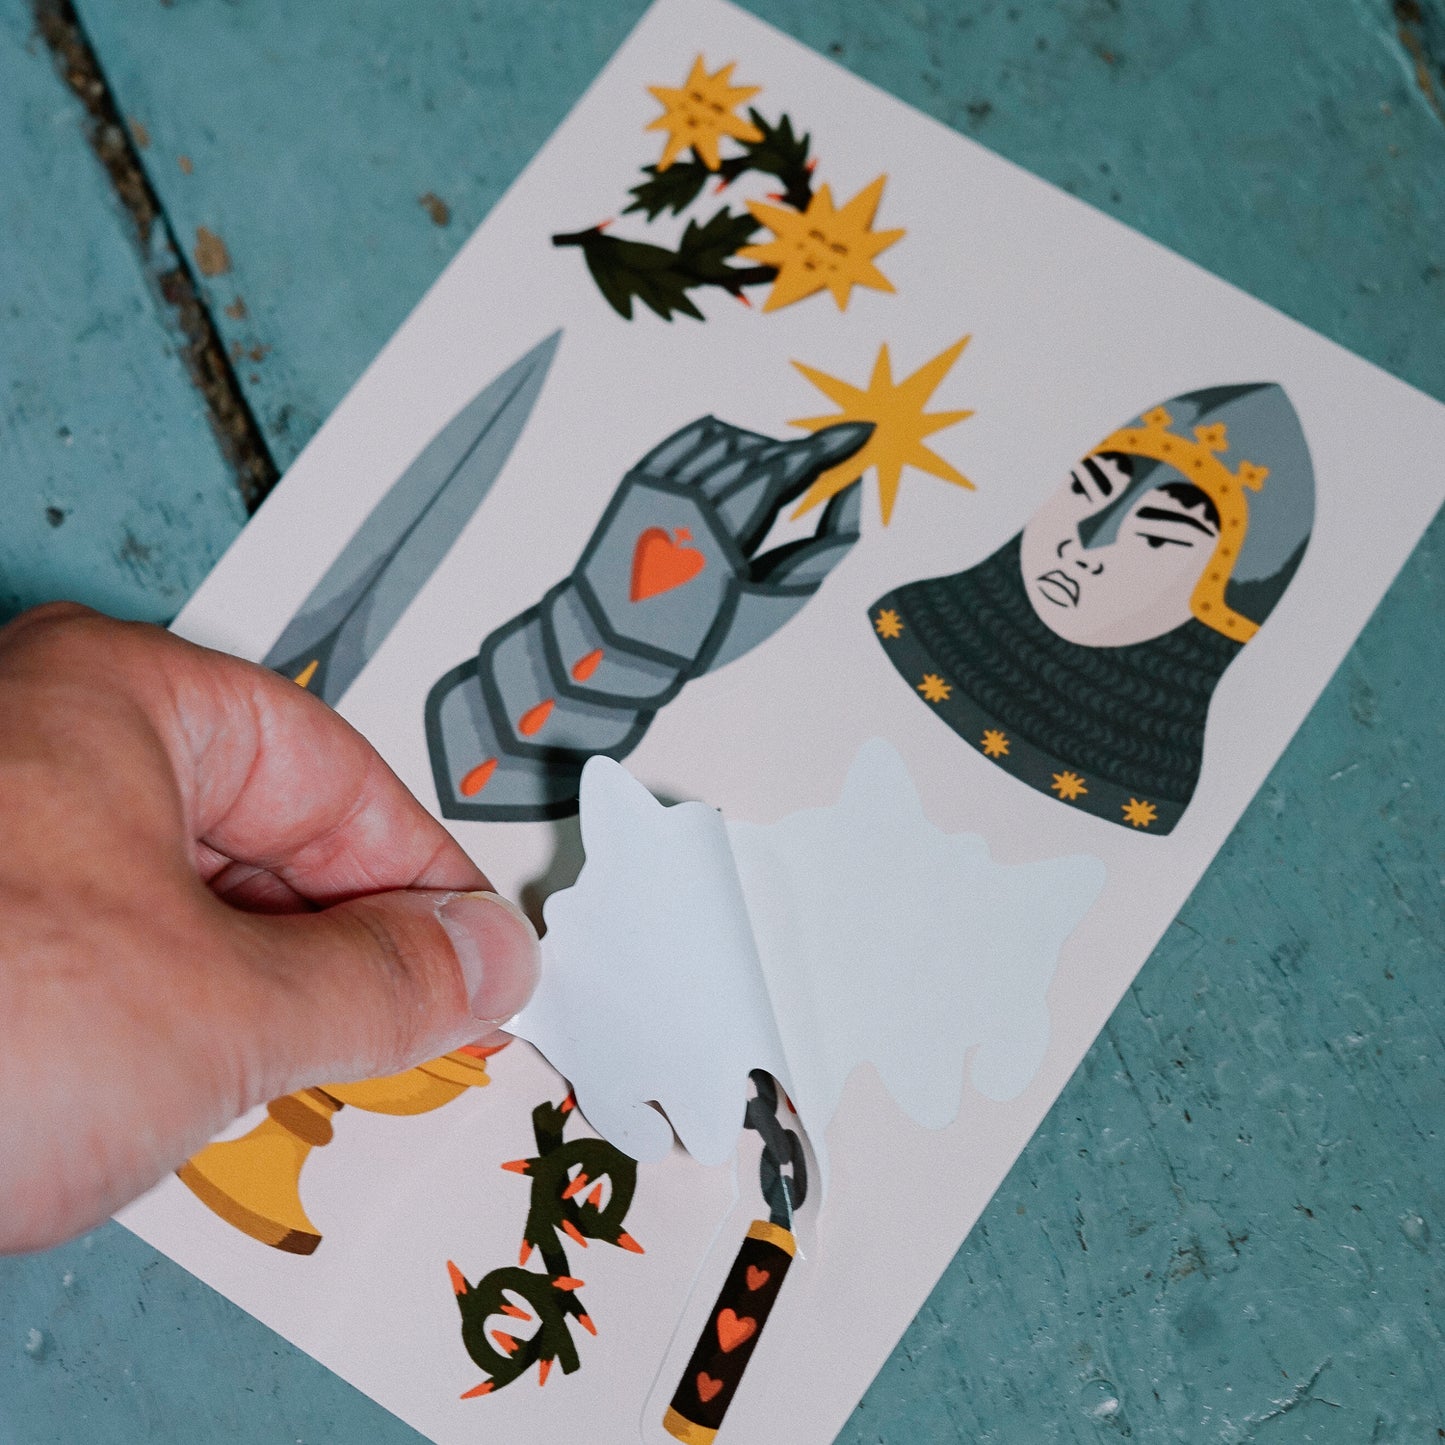 Custom shaped Sticker Sheets